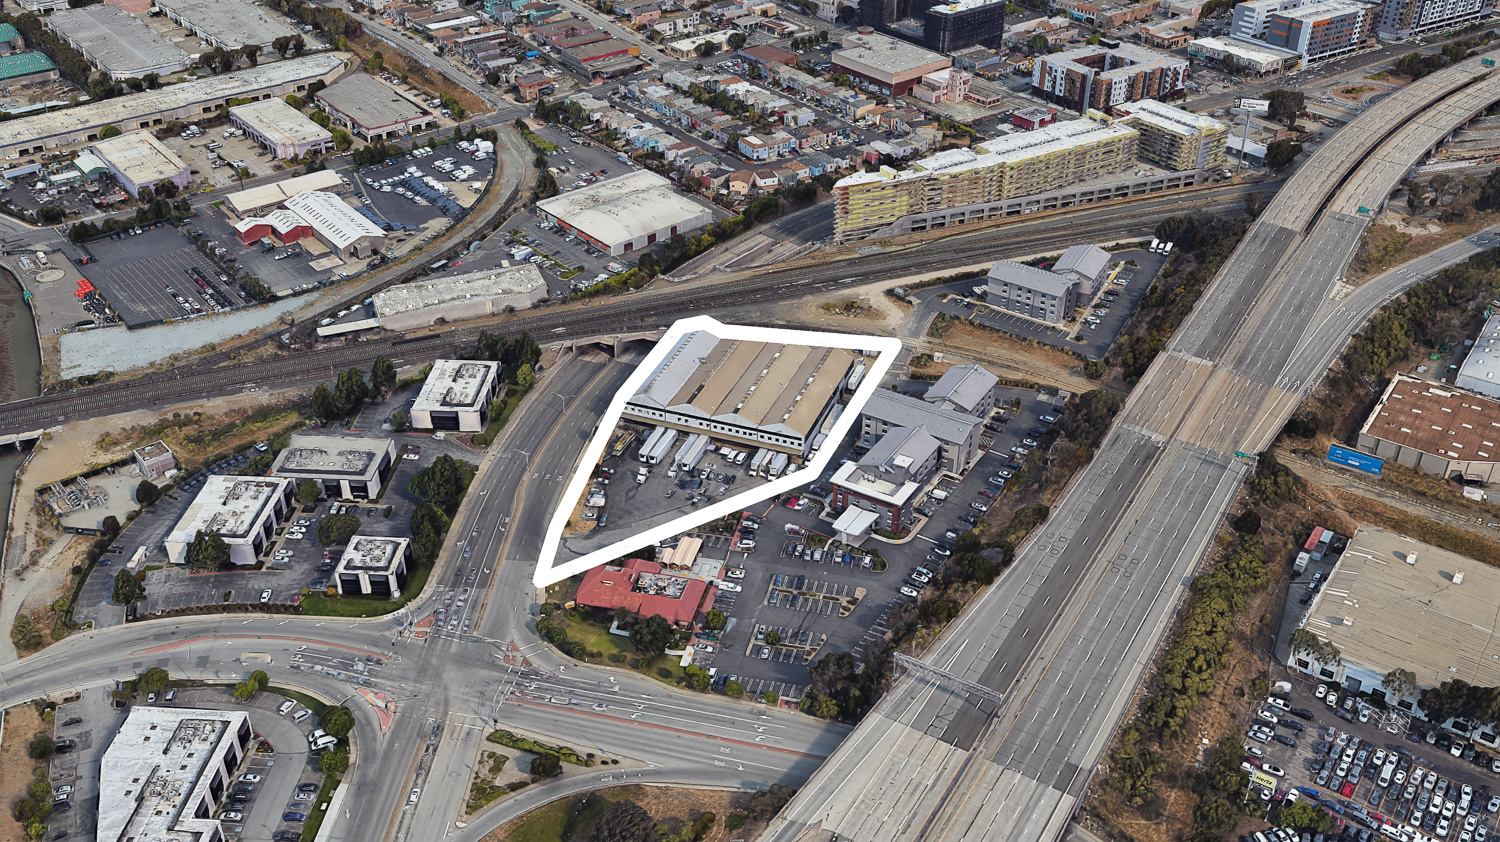 40 Airport Boulevard existing condition, image via Google Satellite